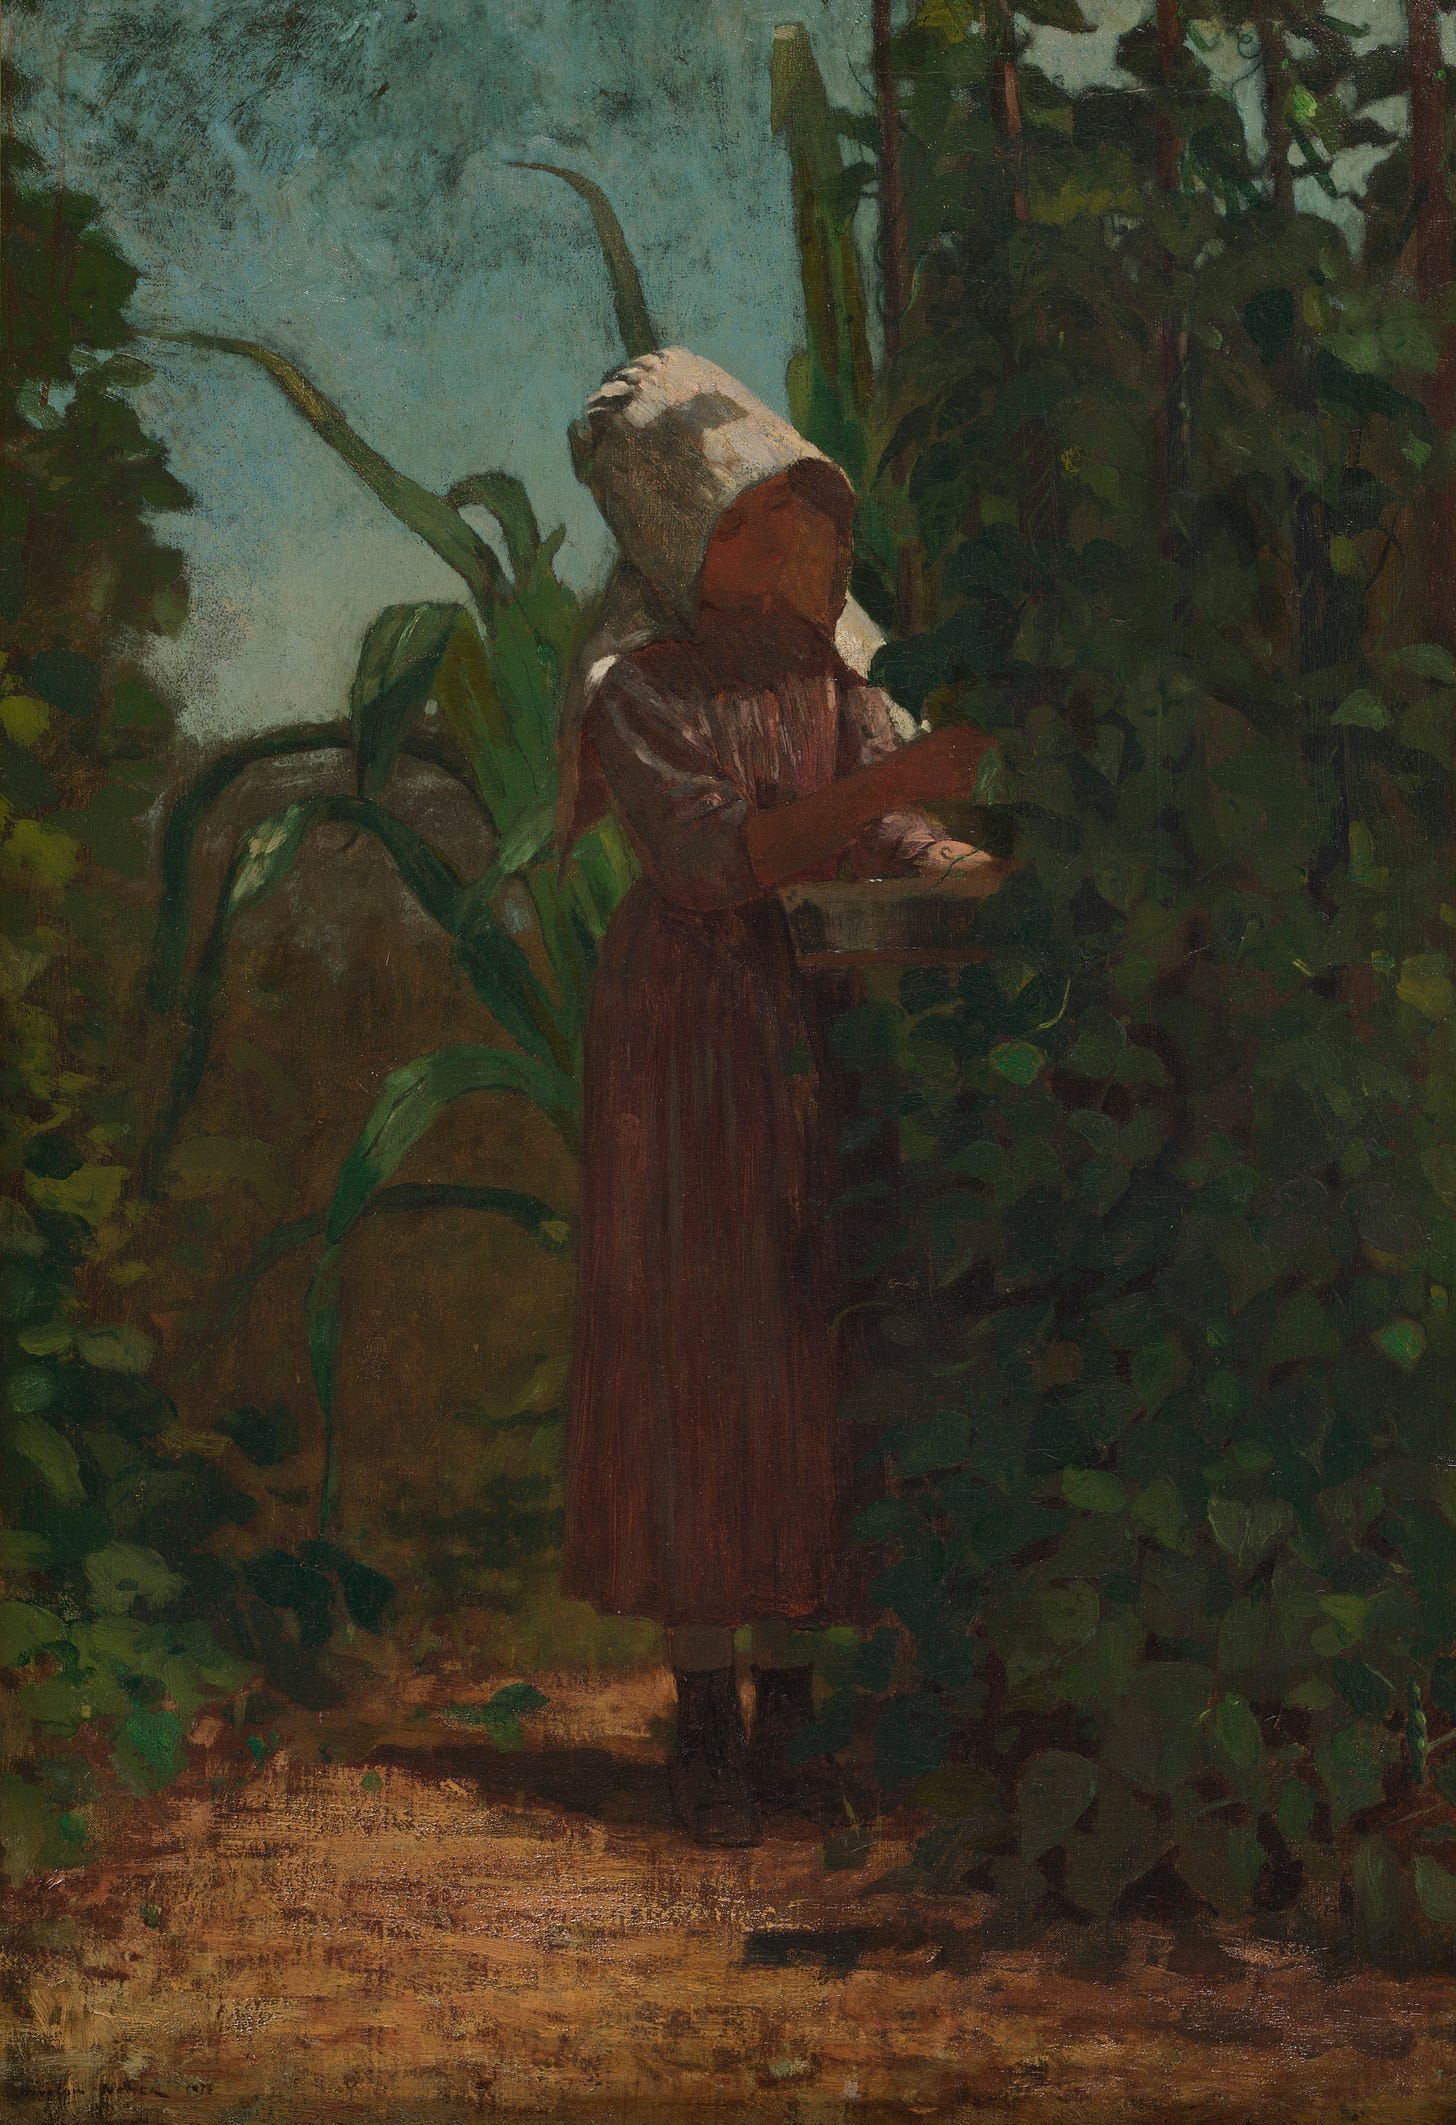 The Bean Picker (ca 1875)